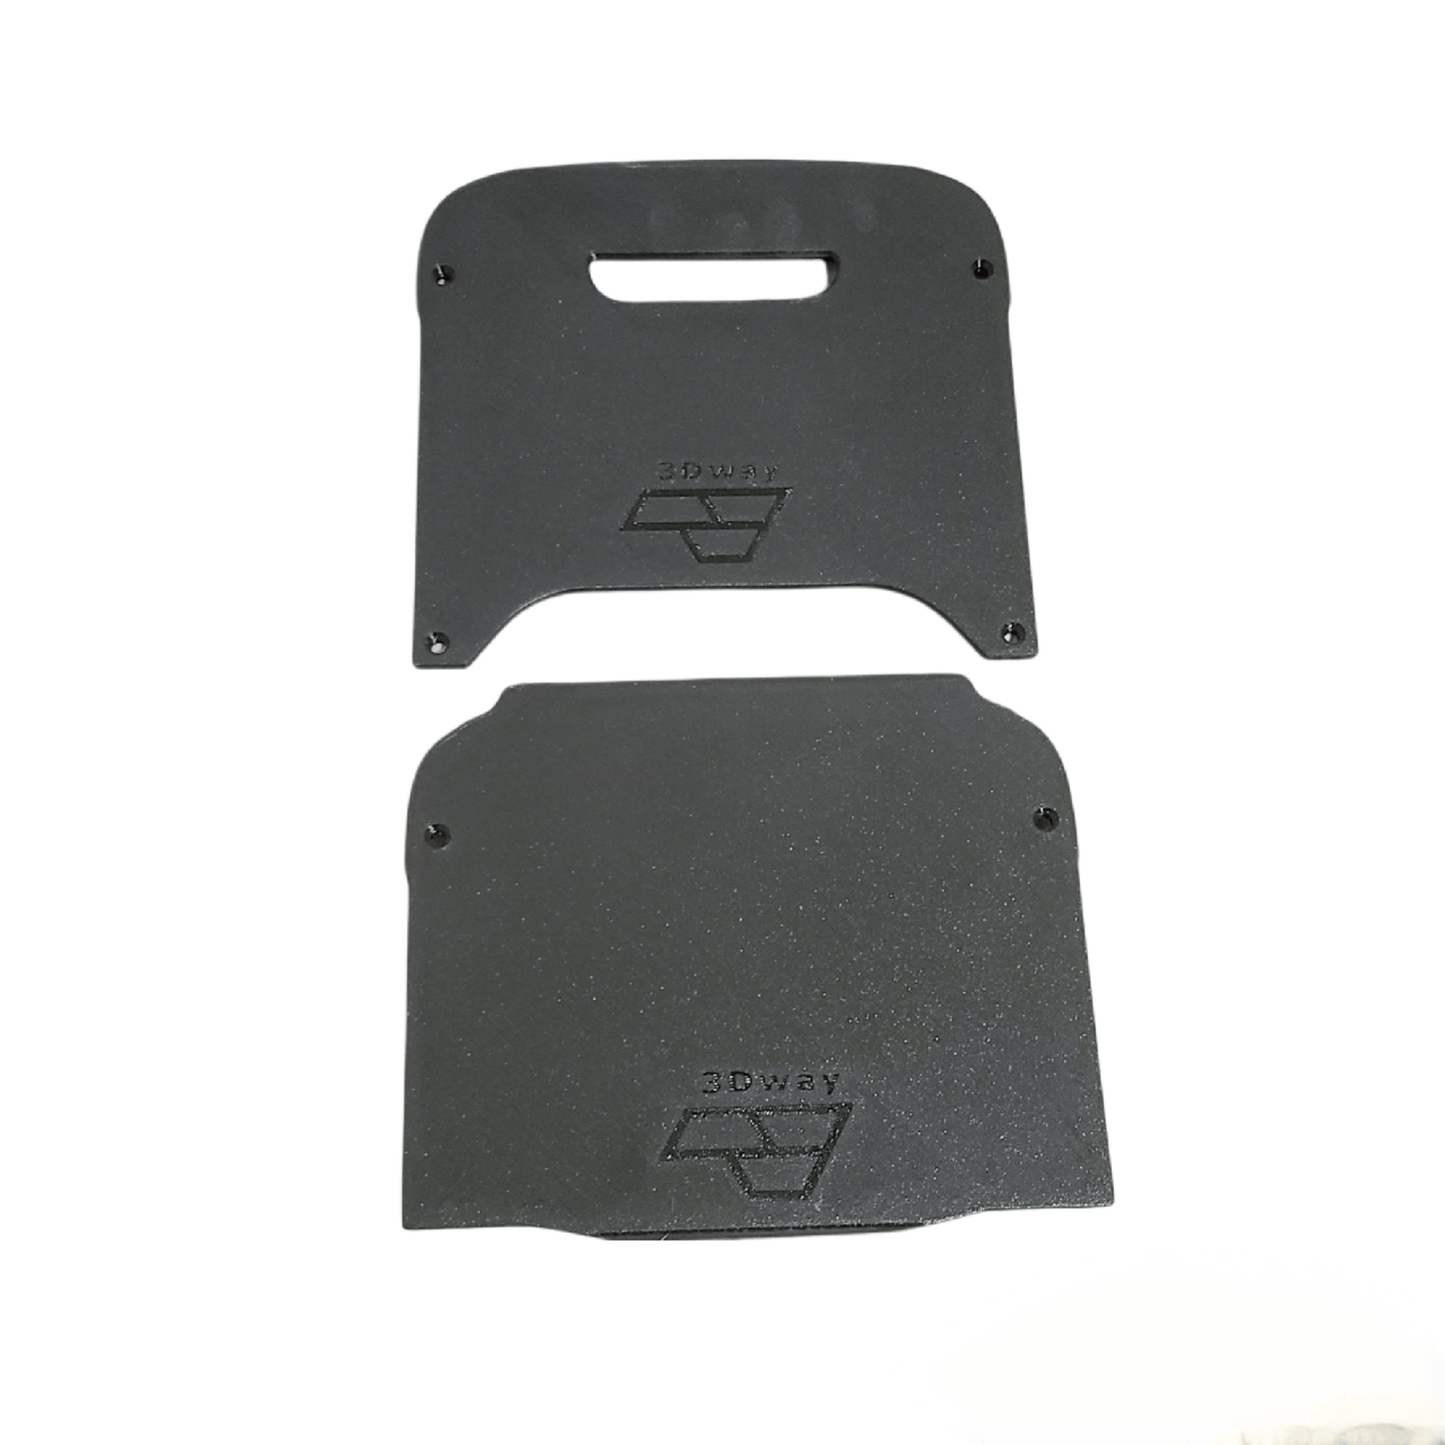 Skid Plate for Onewheel Pint - FloaterShack